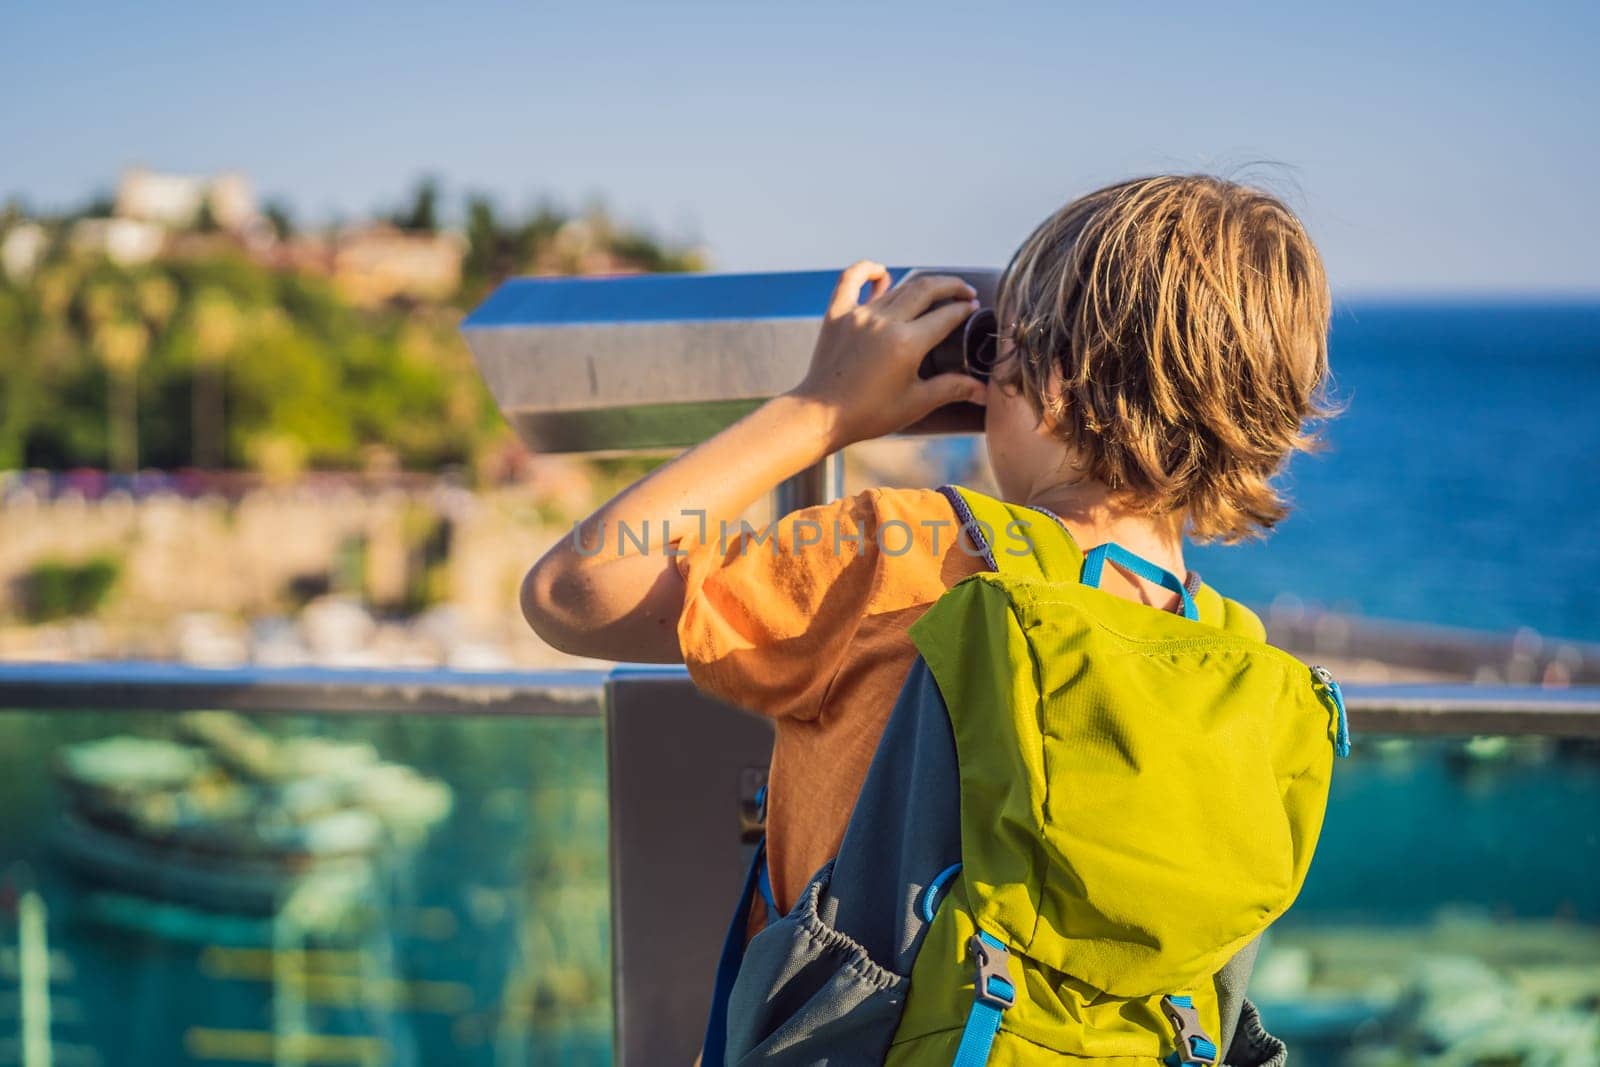 Boy tourist looks through binoculars in Old town Kaleici in Antalya. Turkiye. Panoramic view of Antalya Old Town port, Taurus mountains and Mediterrranean Sea, Turkey. Traveling with kids concept.